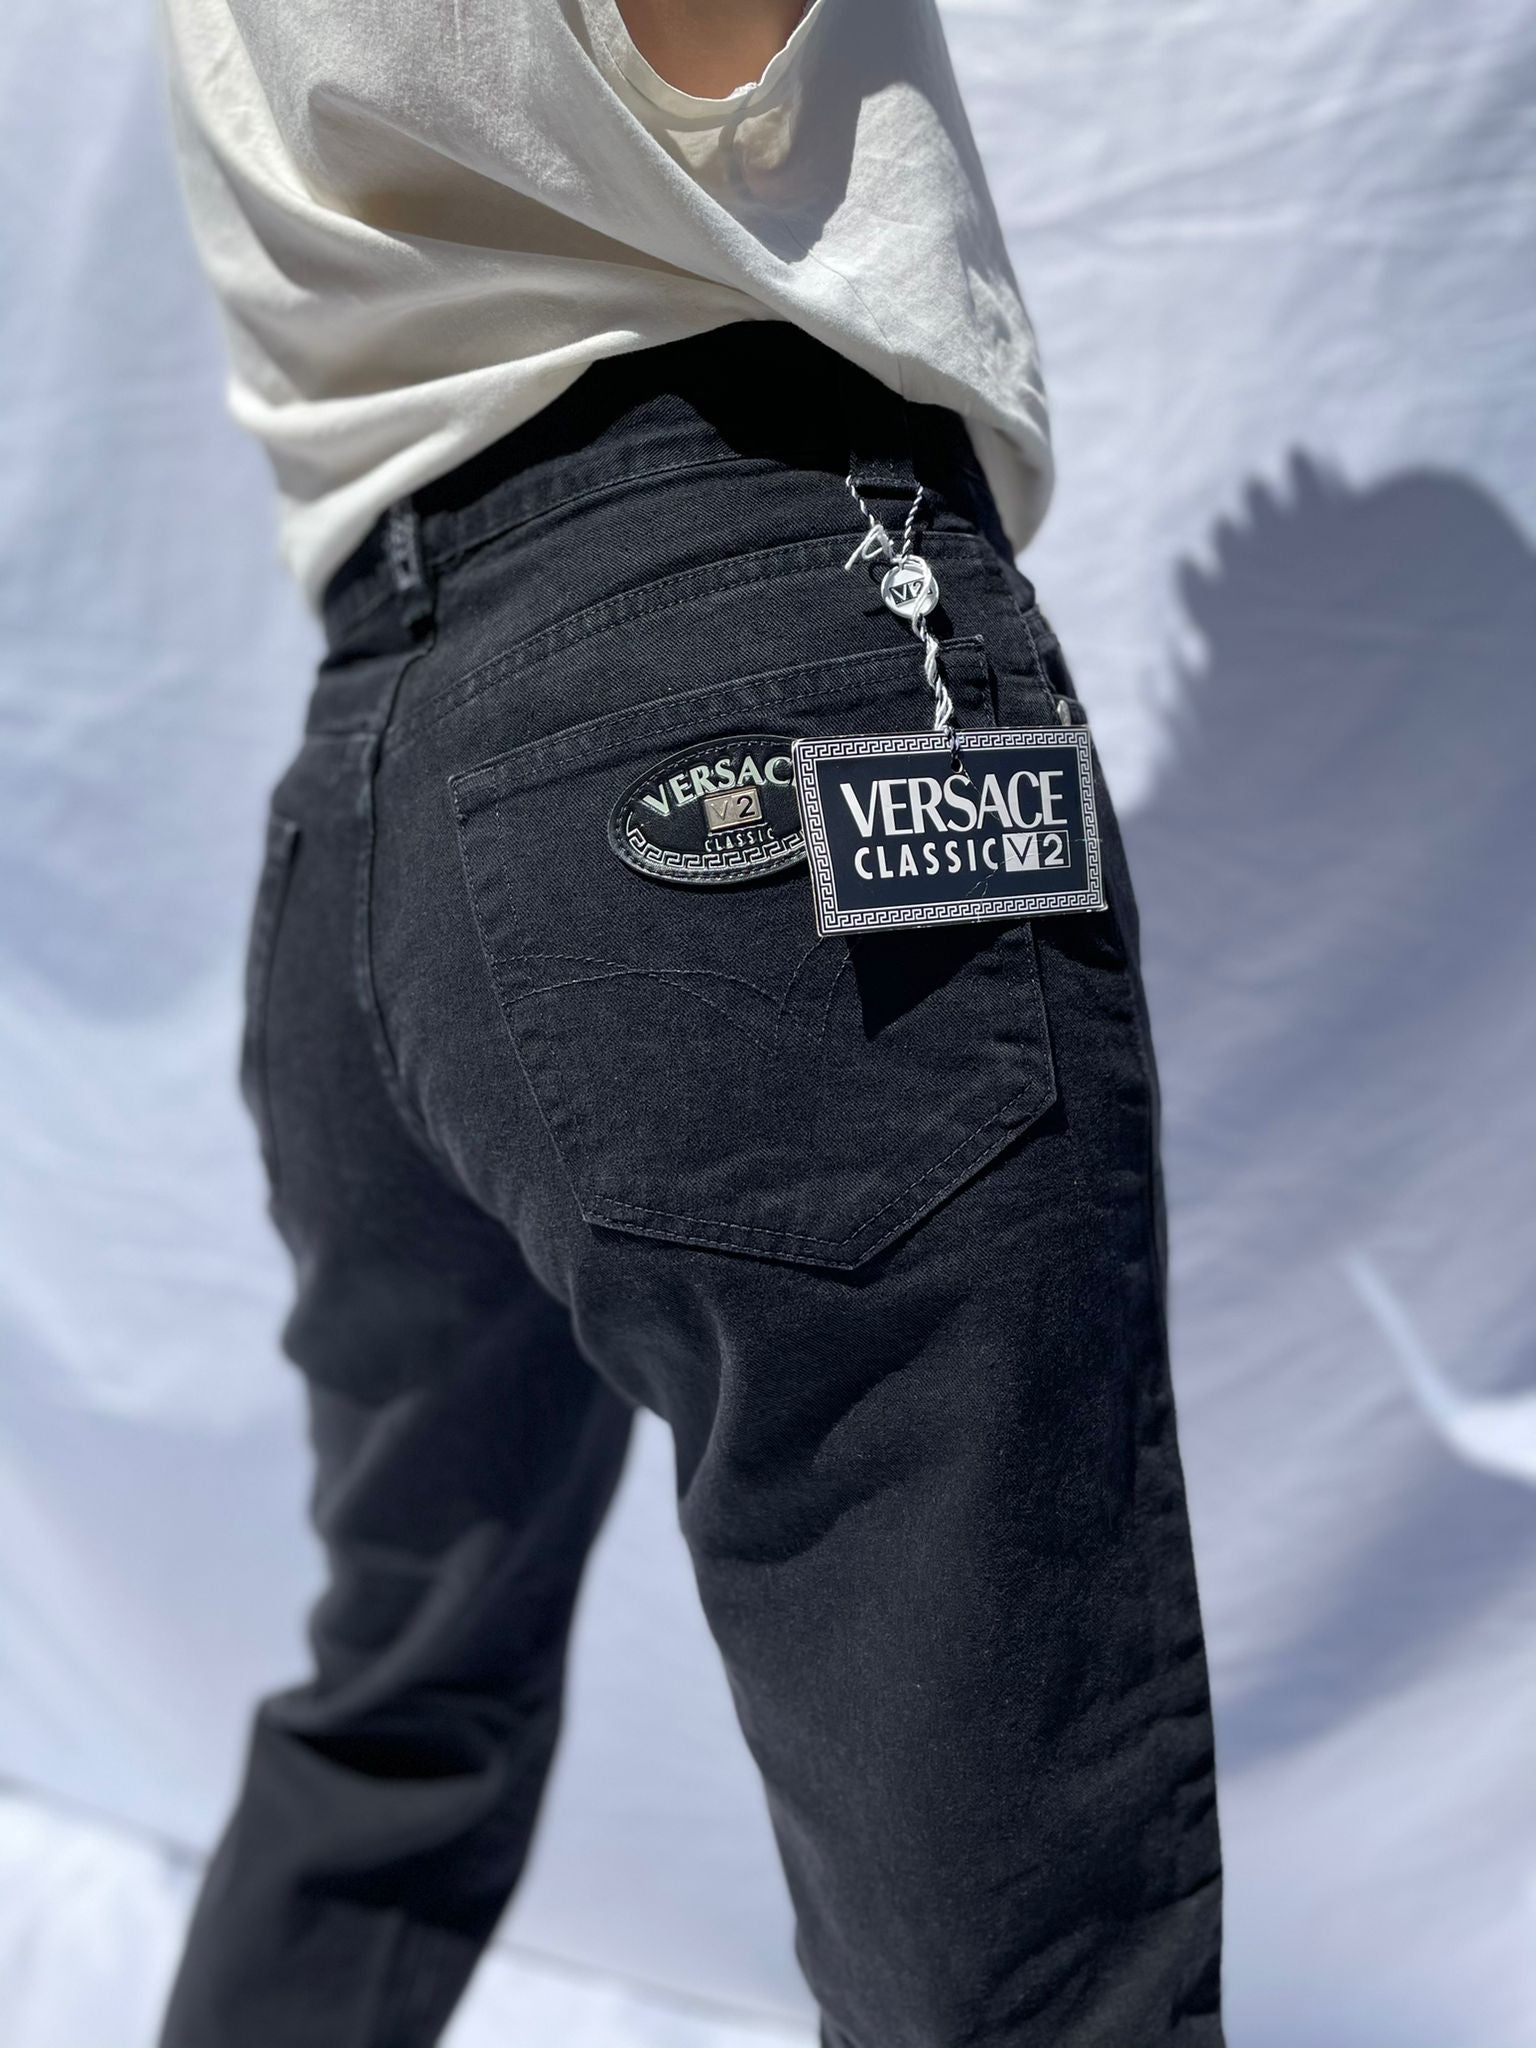 Implementeren plaag kortademigheid Versace Classic V2 men's jeans in black color - Mudvintage – Fangovintage